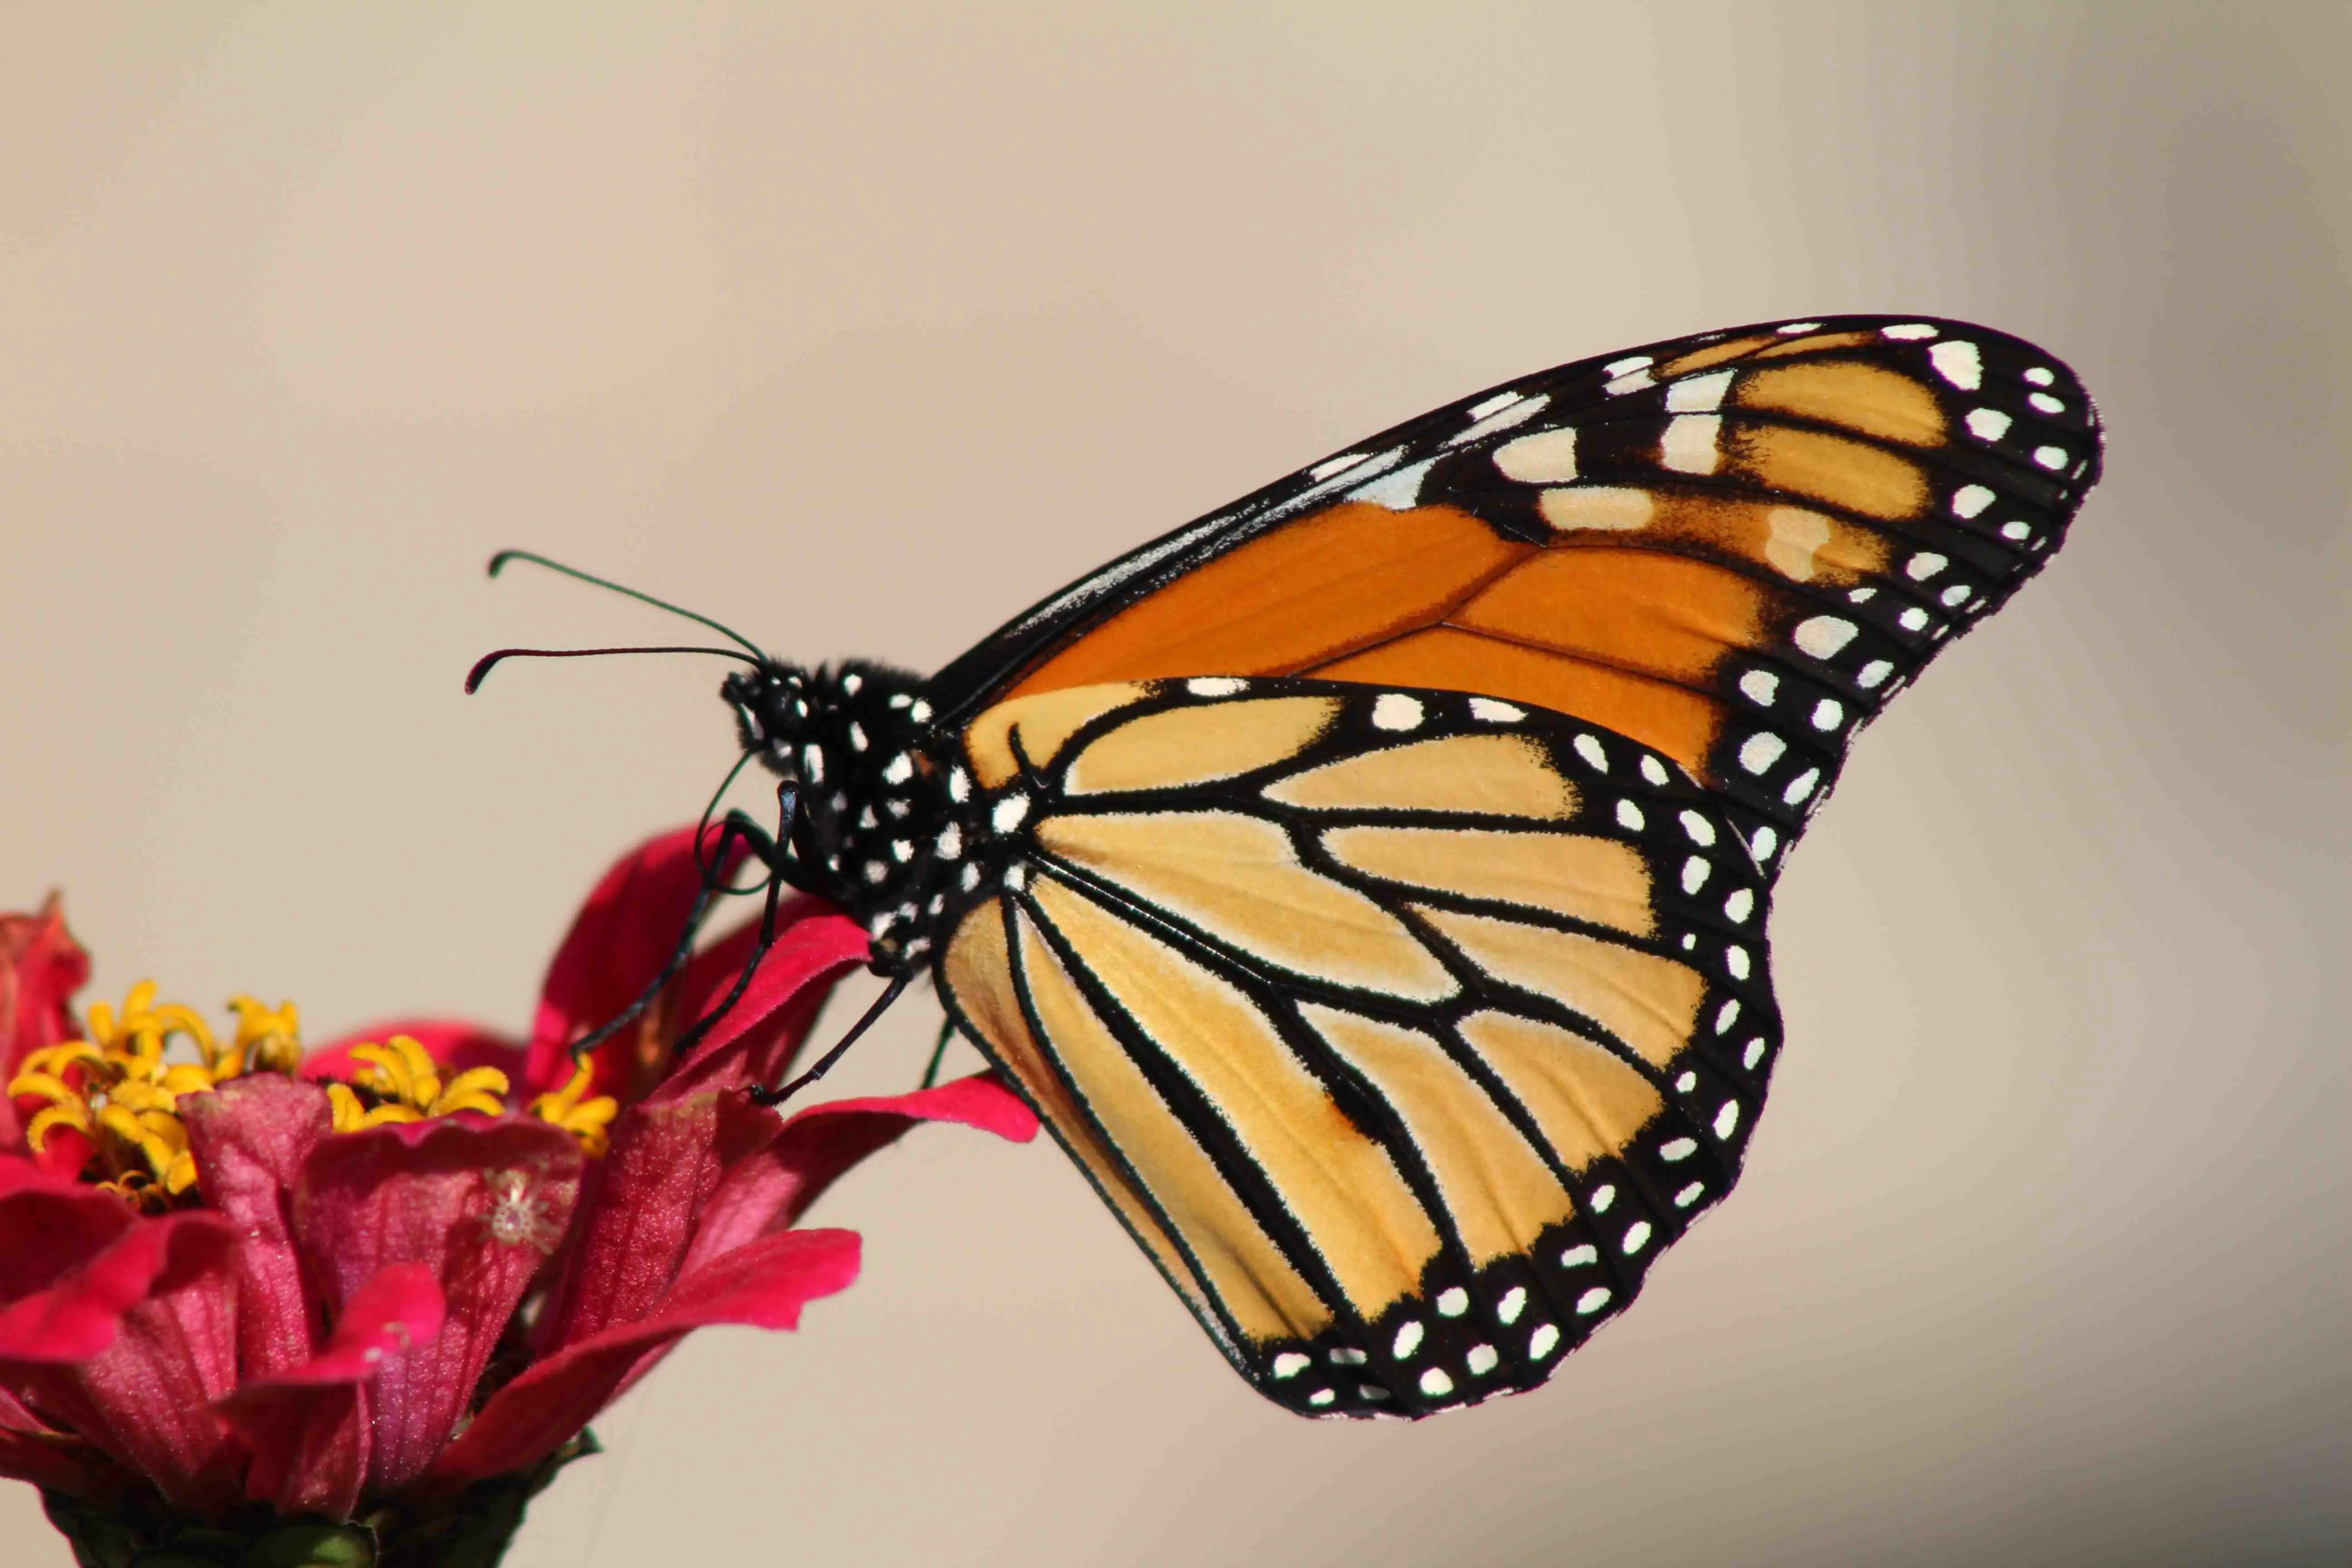 Monarch Butterfly In Popular Culture